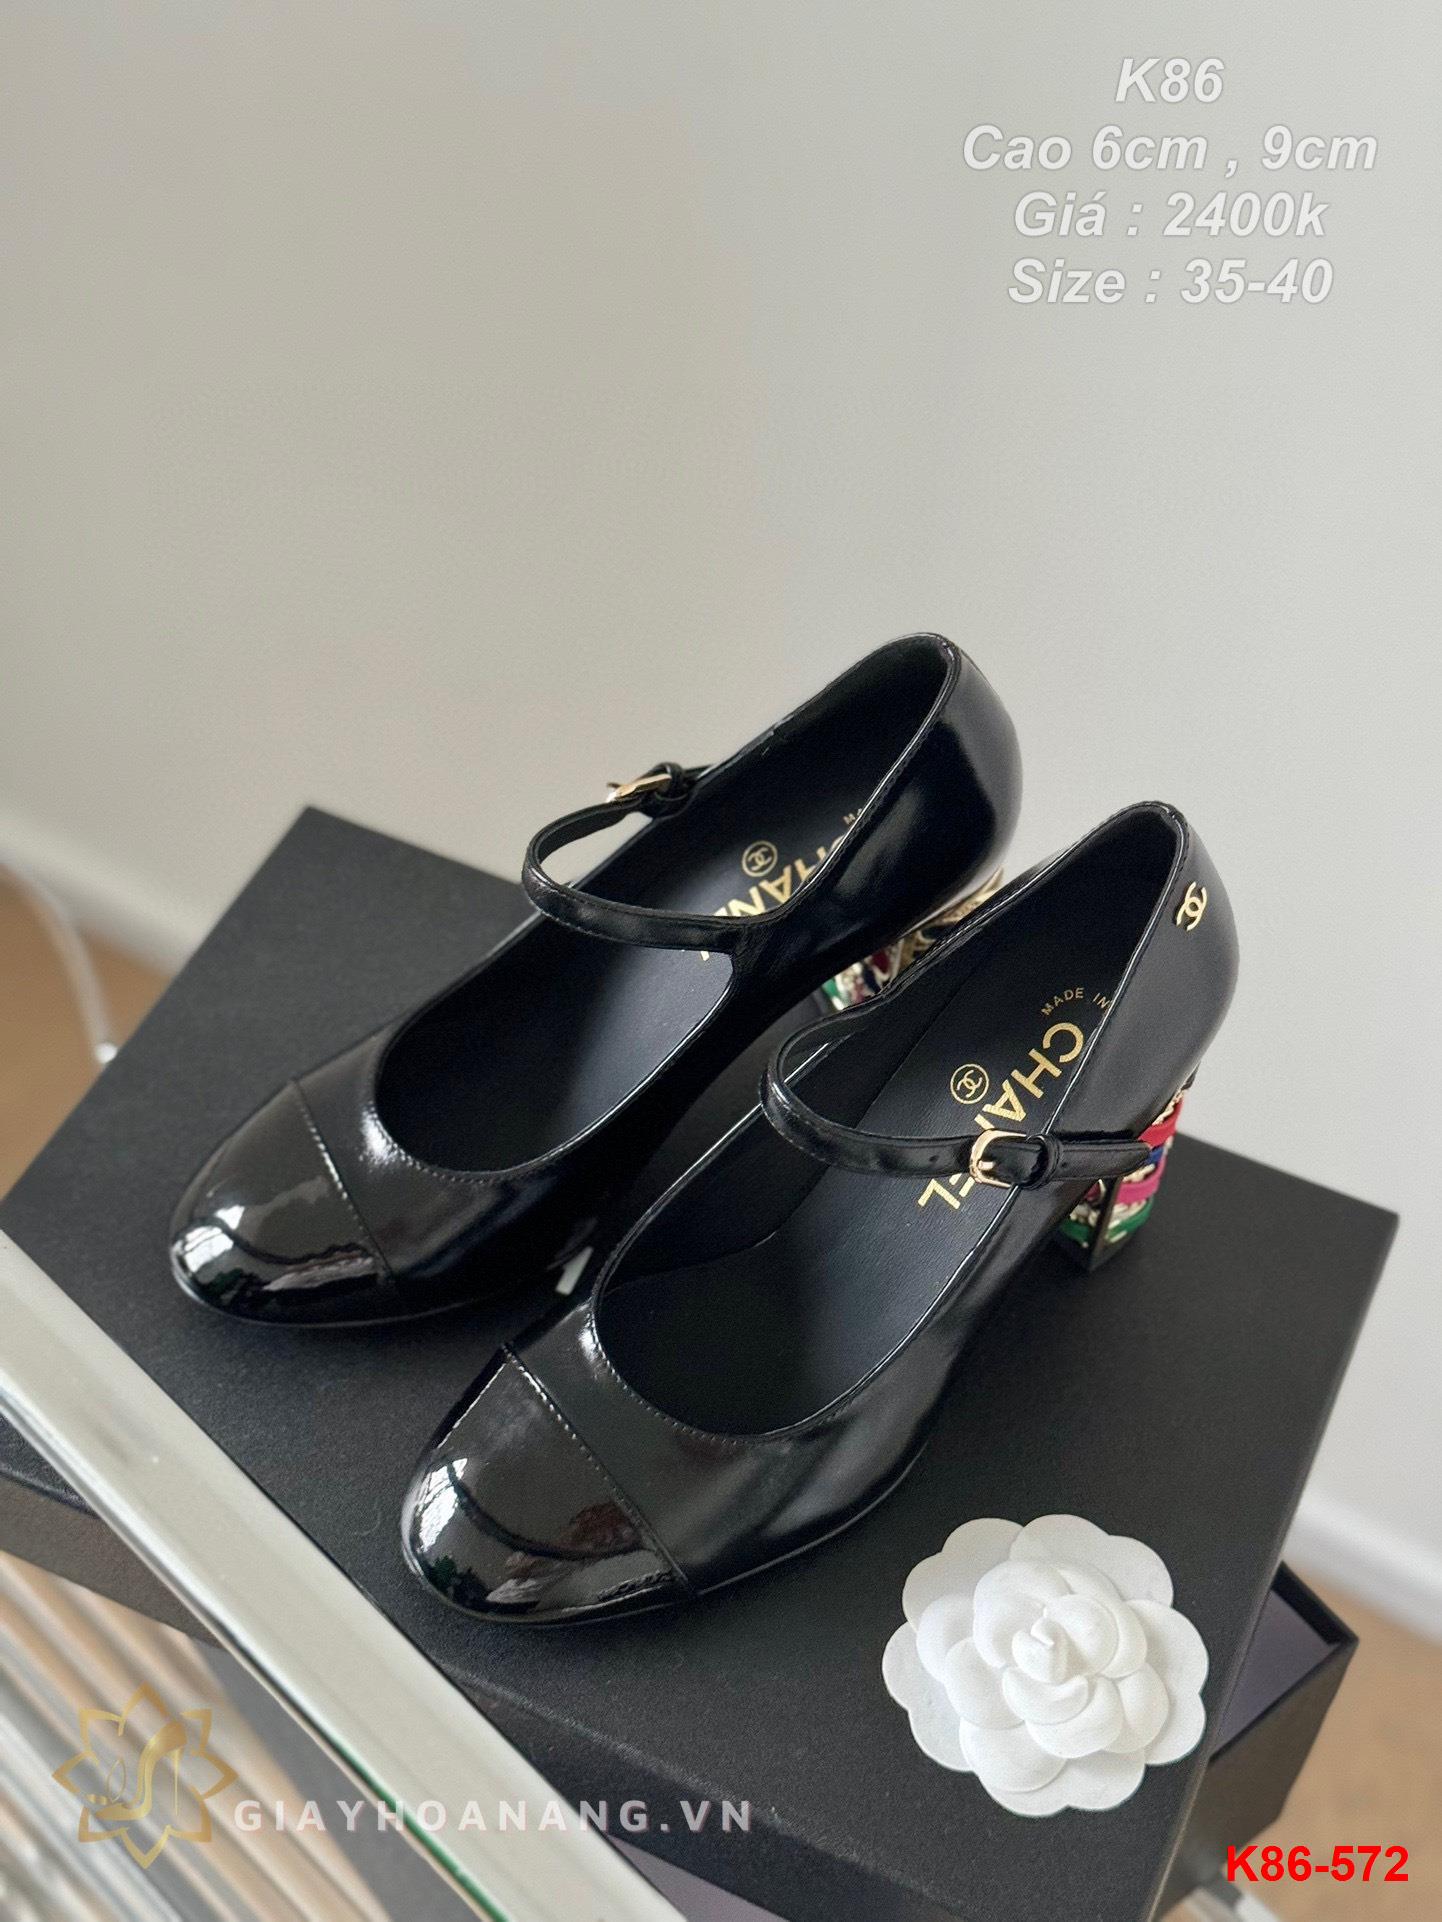 K86-572 Chanel giày cao 6cm , 9cm siêu cấp